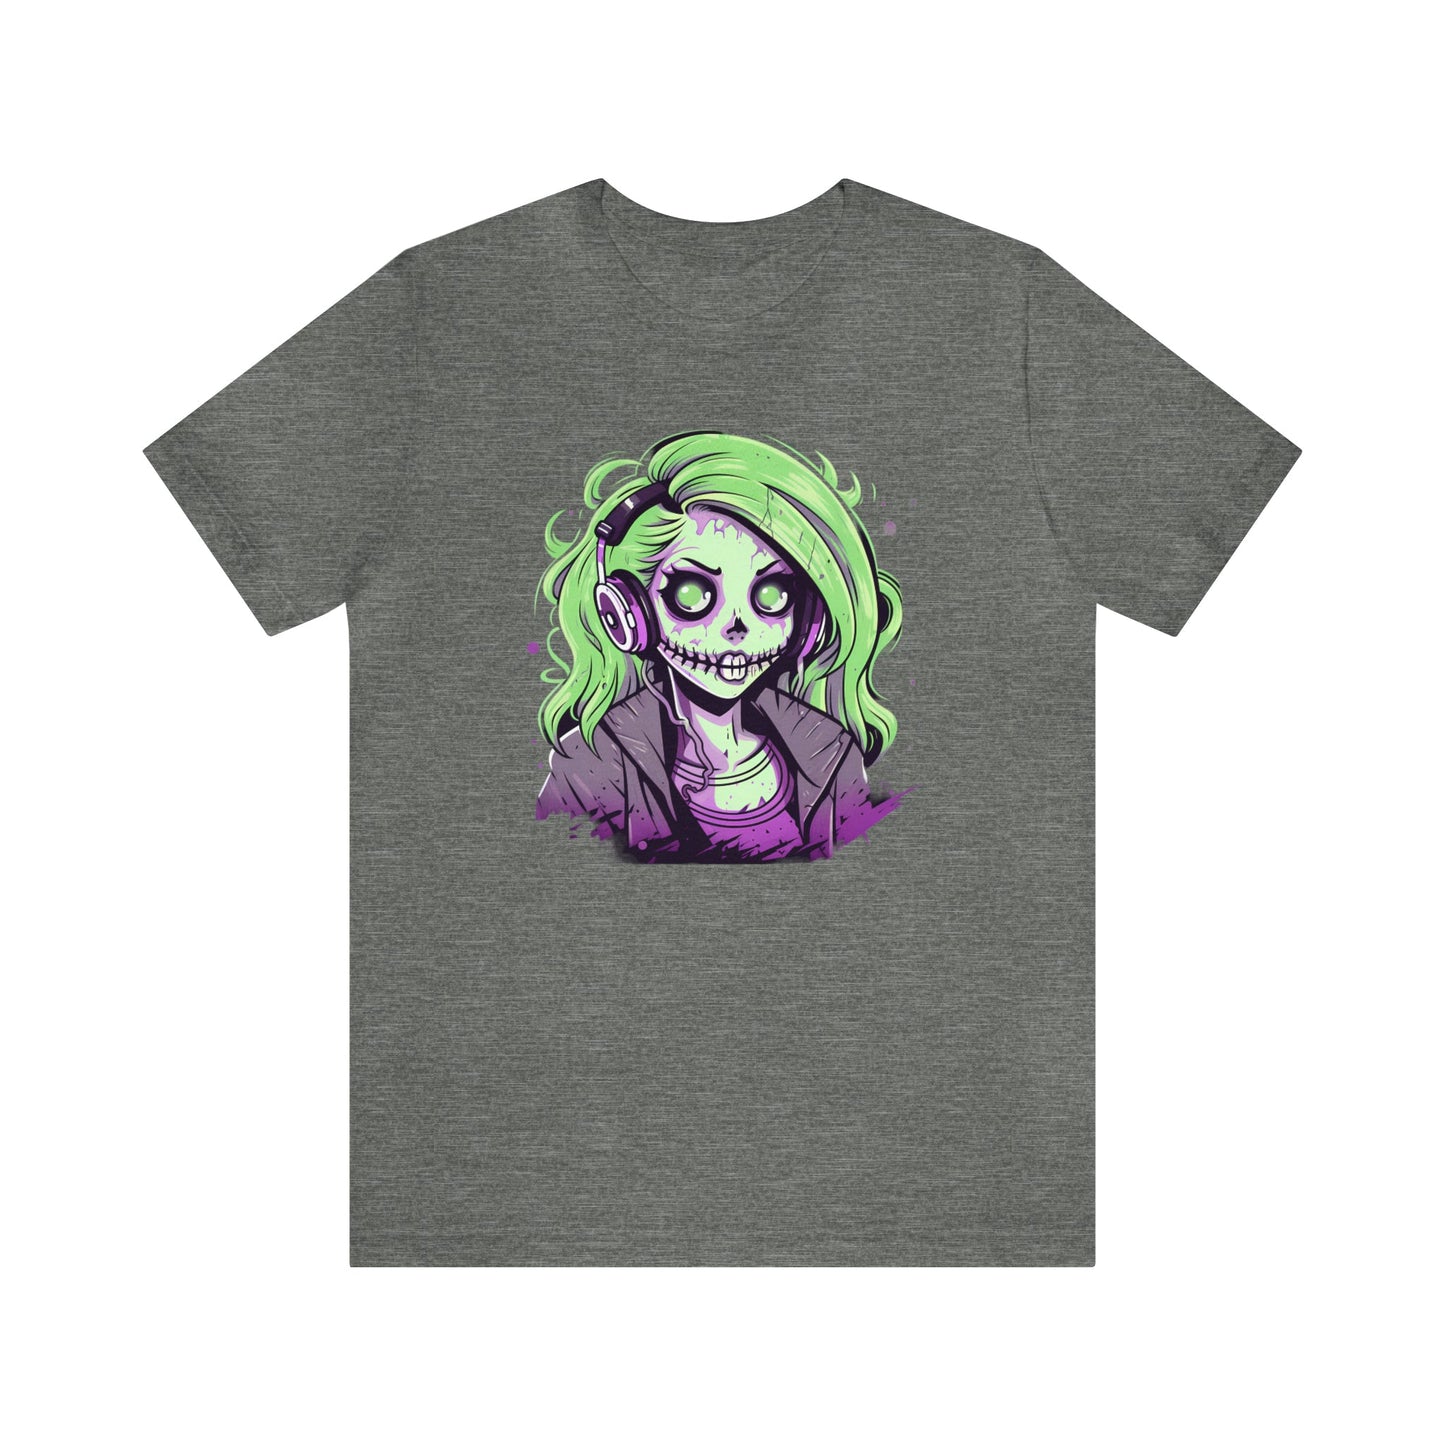 Gamer Ghoul Jersey Tee ShirtT - ShirtVTZdesignsBlackXSCottonCrew neckDTG